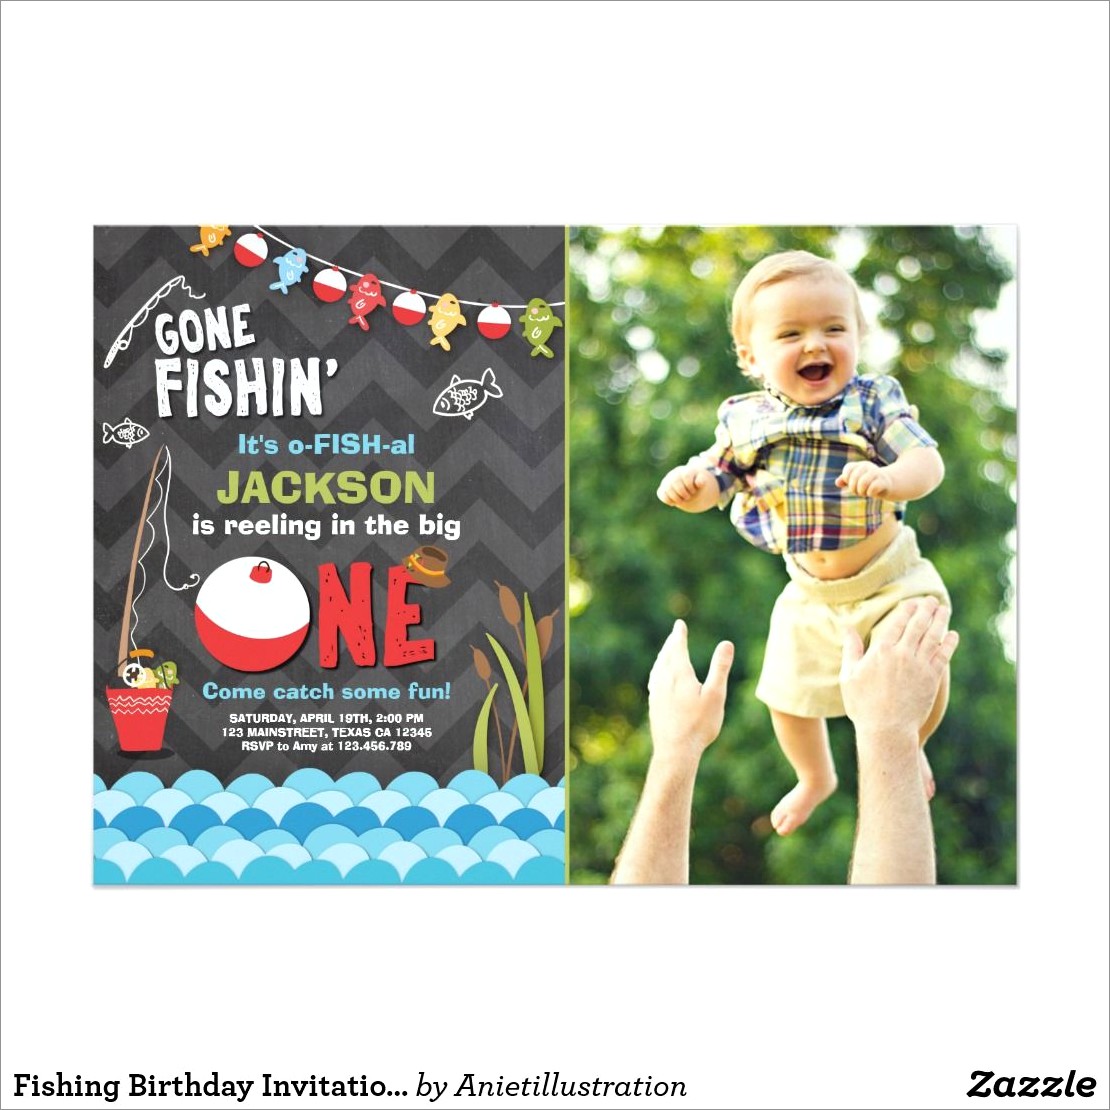 The Big One Fishing Birthday Invitations